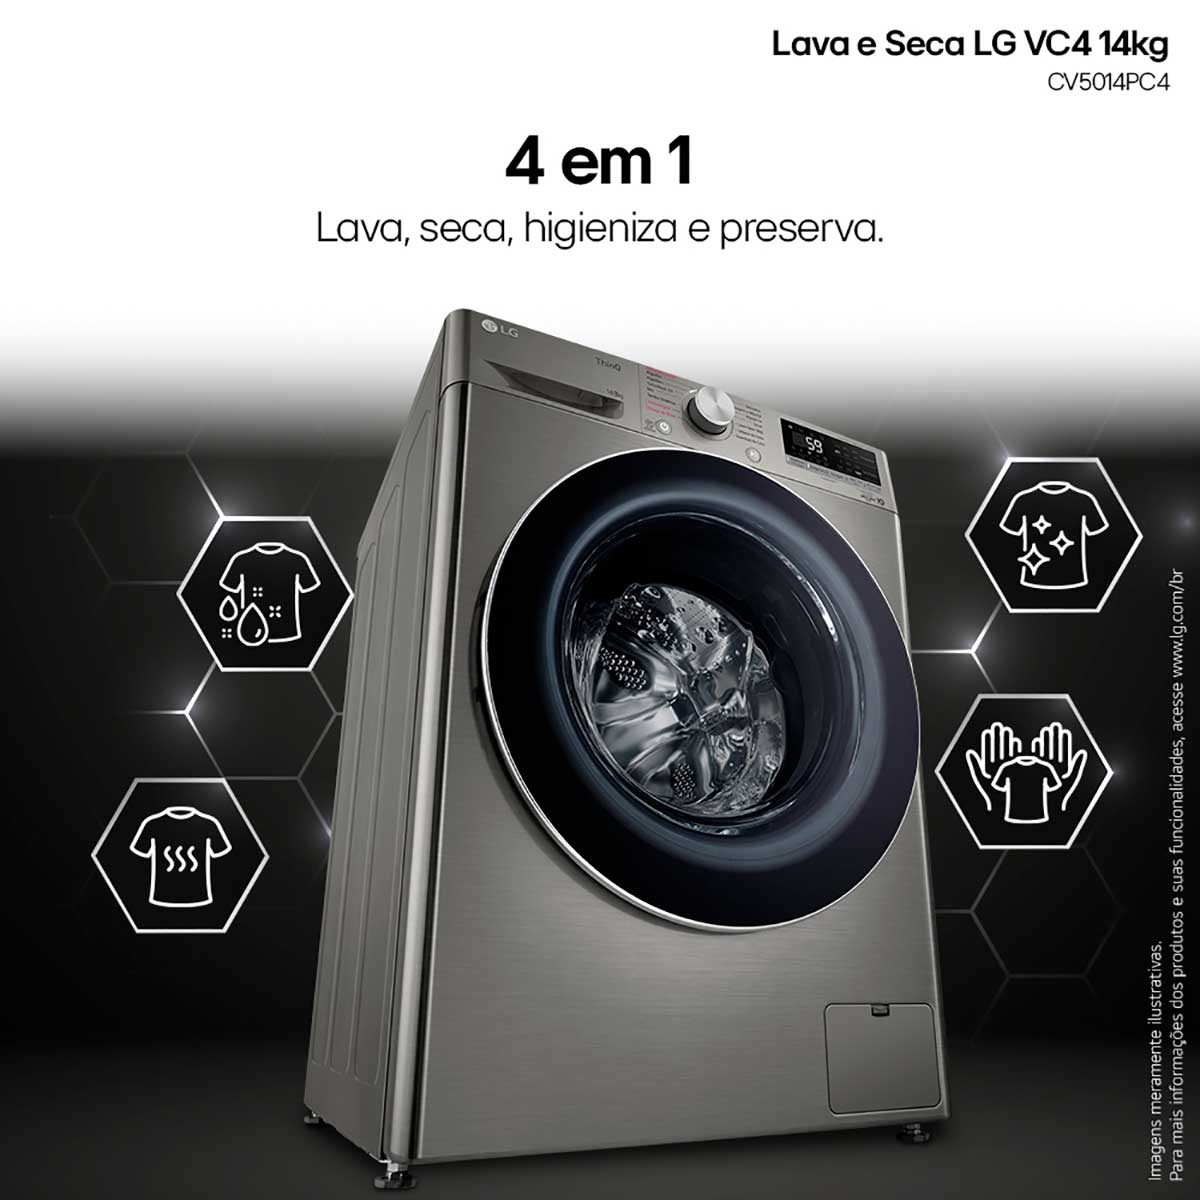 lava-e-seca-lg-smart-vc4-14kg-inox-look-com-inteligencia-artificial-aidd-cv5014pc4-110v-8.jpg